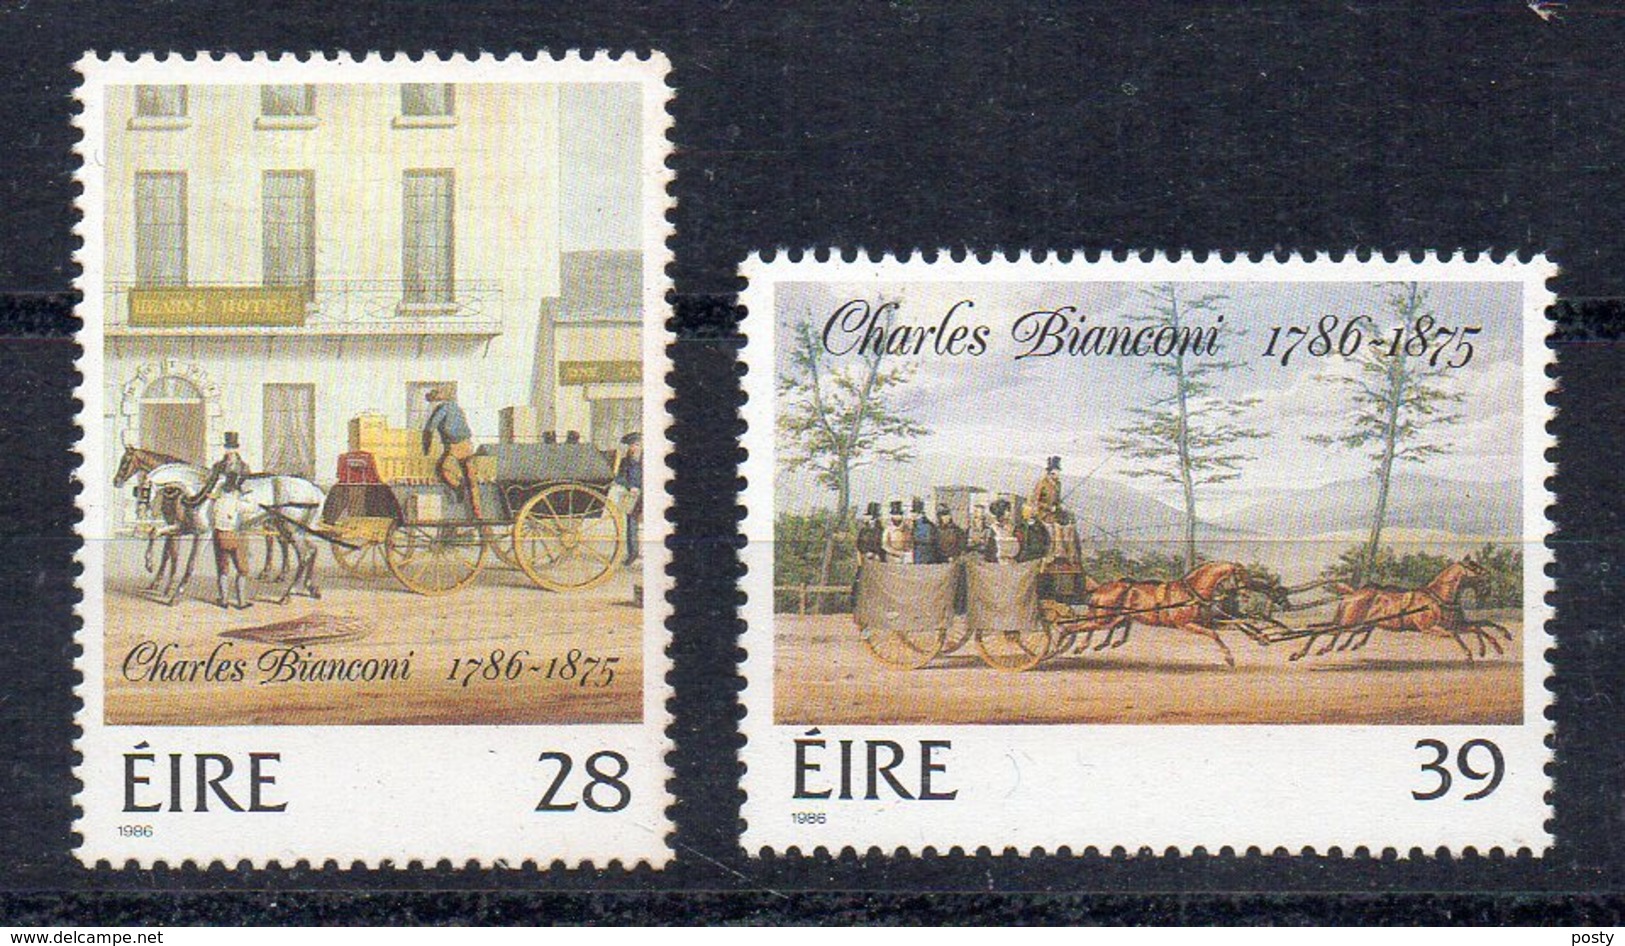 IRLANDE - EIRE - IRELAND - 1986 - CHARLES BIANCONI - 200th ANNIVERSARY OF BIRTH - BICENTENAIRE DE LA NAISSANCE - CHEVAUX - Unused Stamps